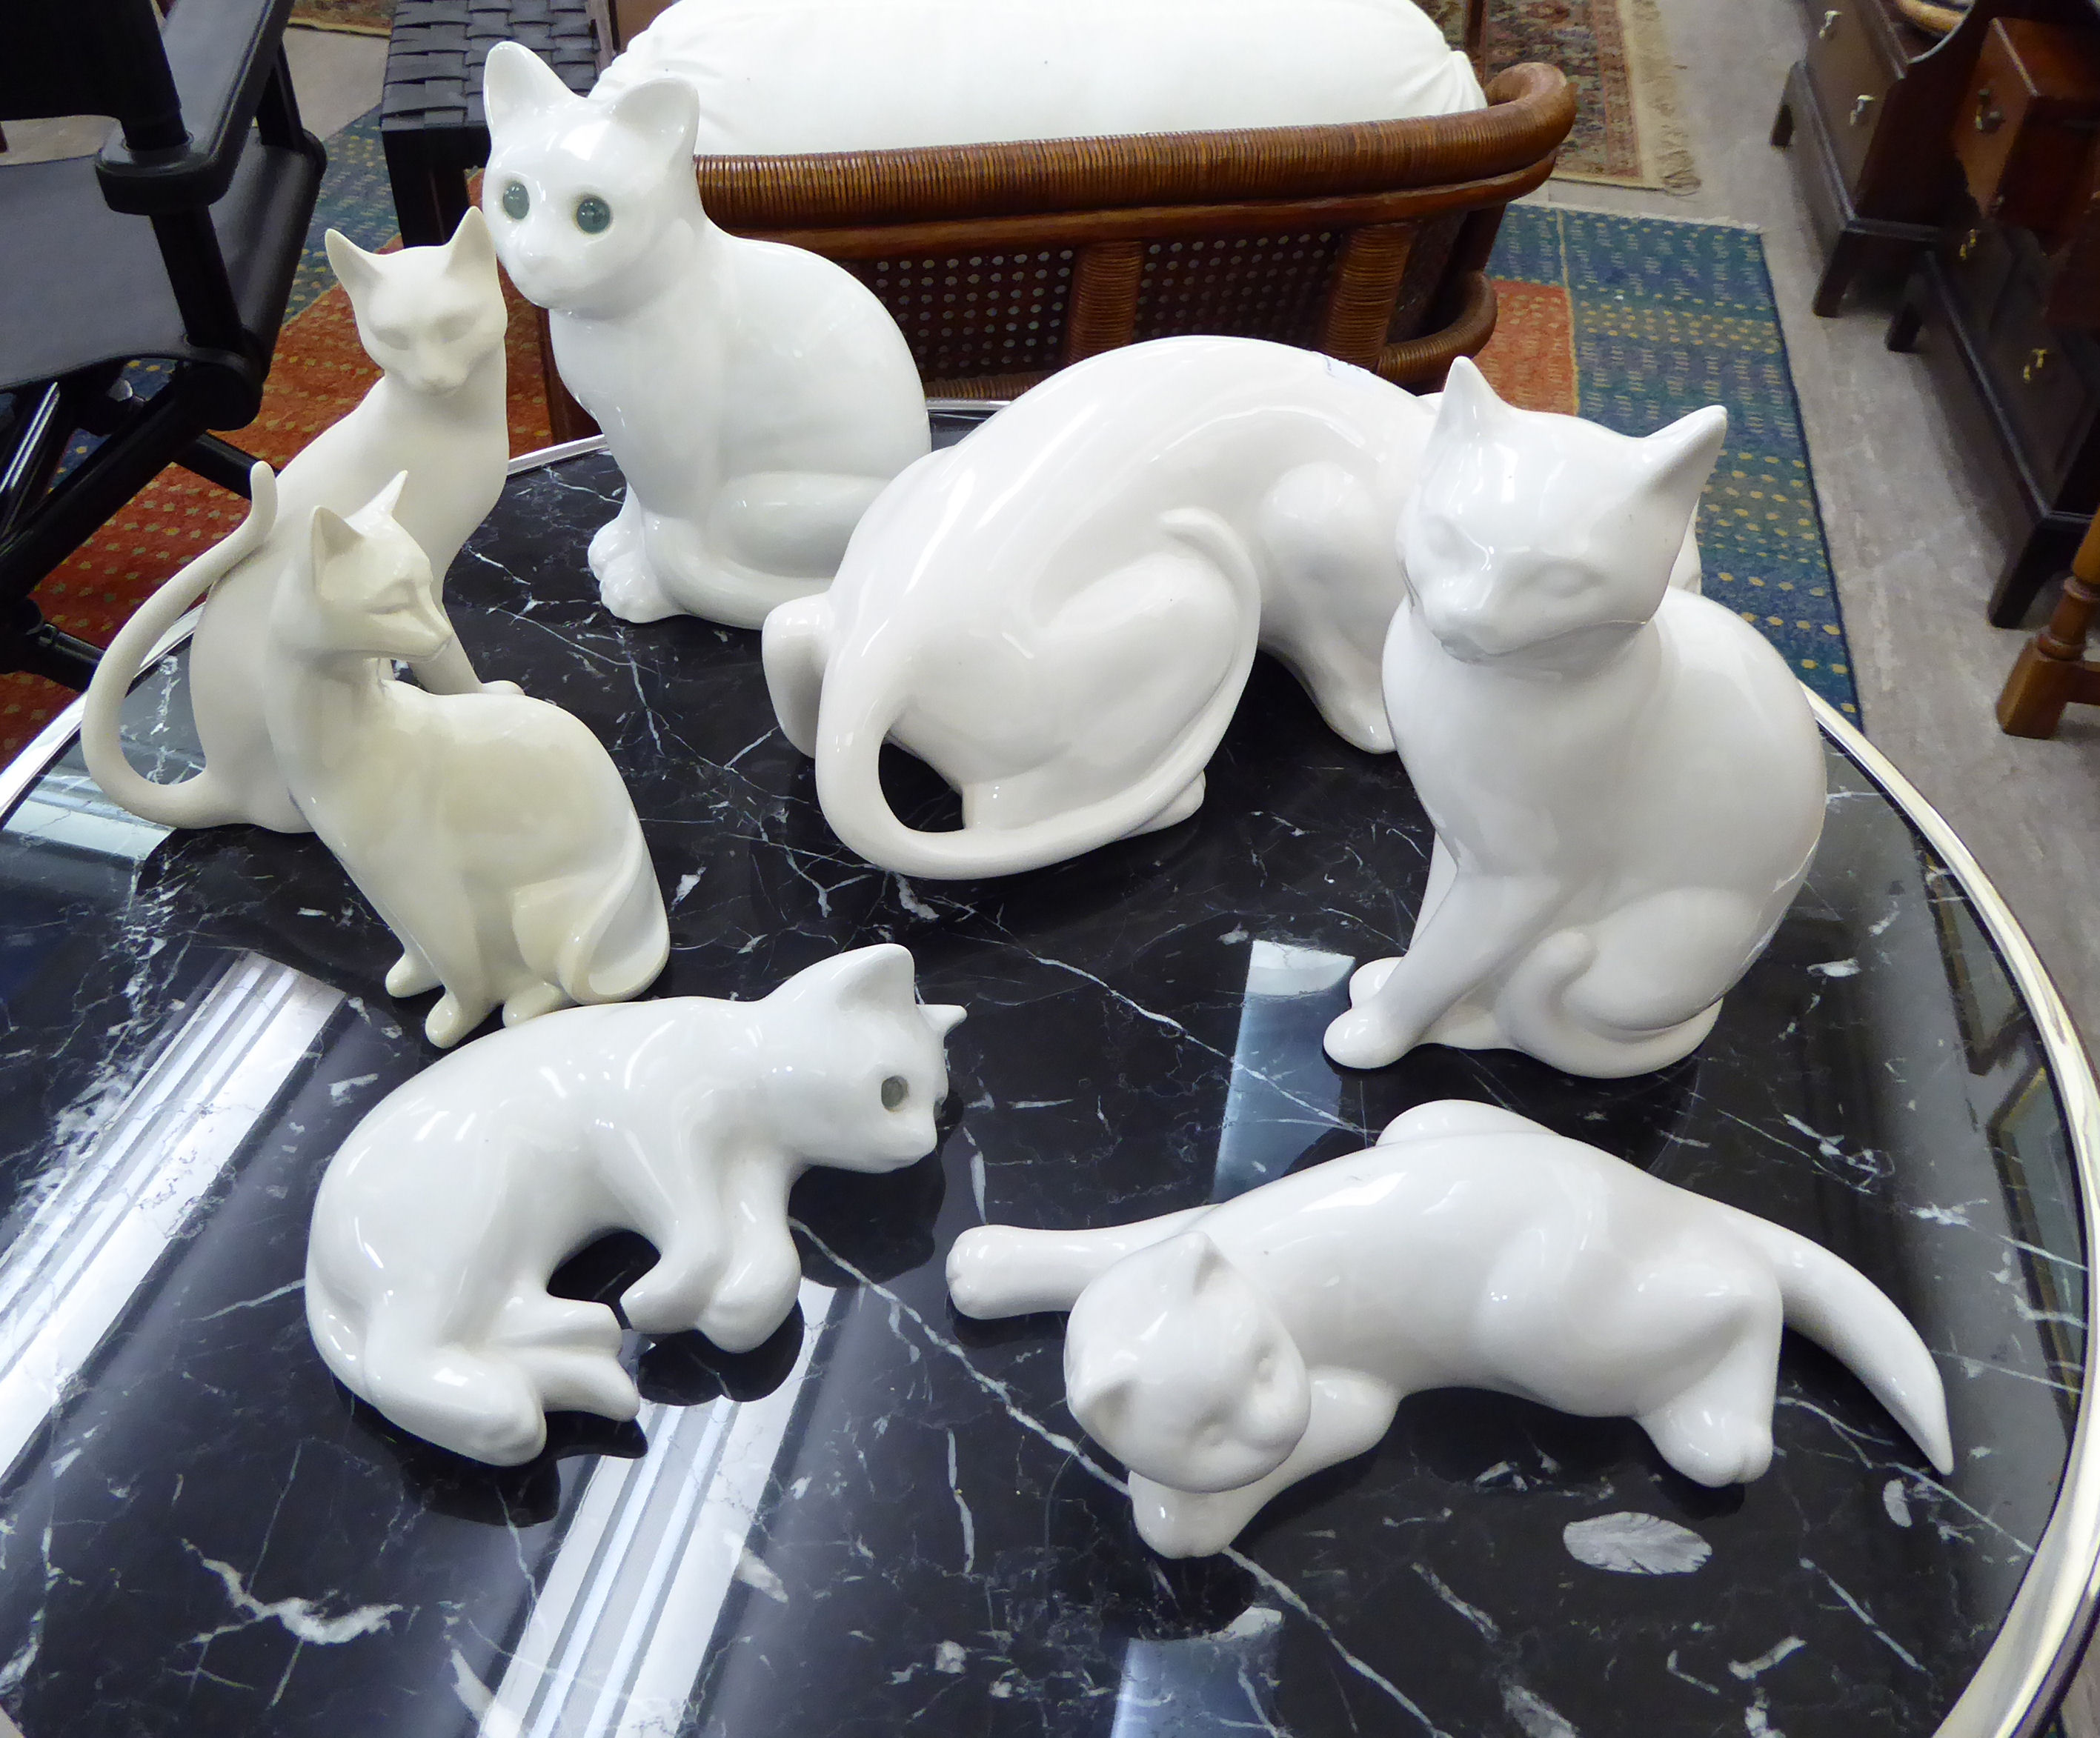 Variously made ceramic cats,